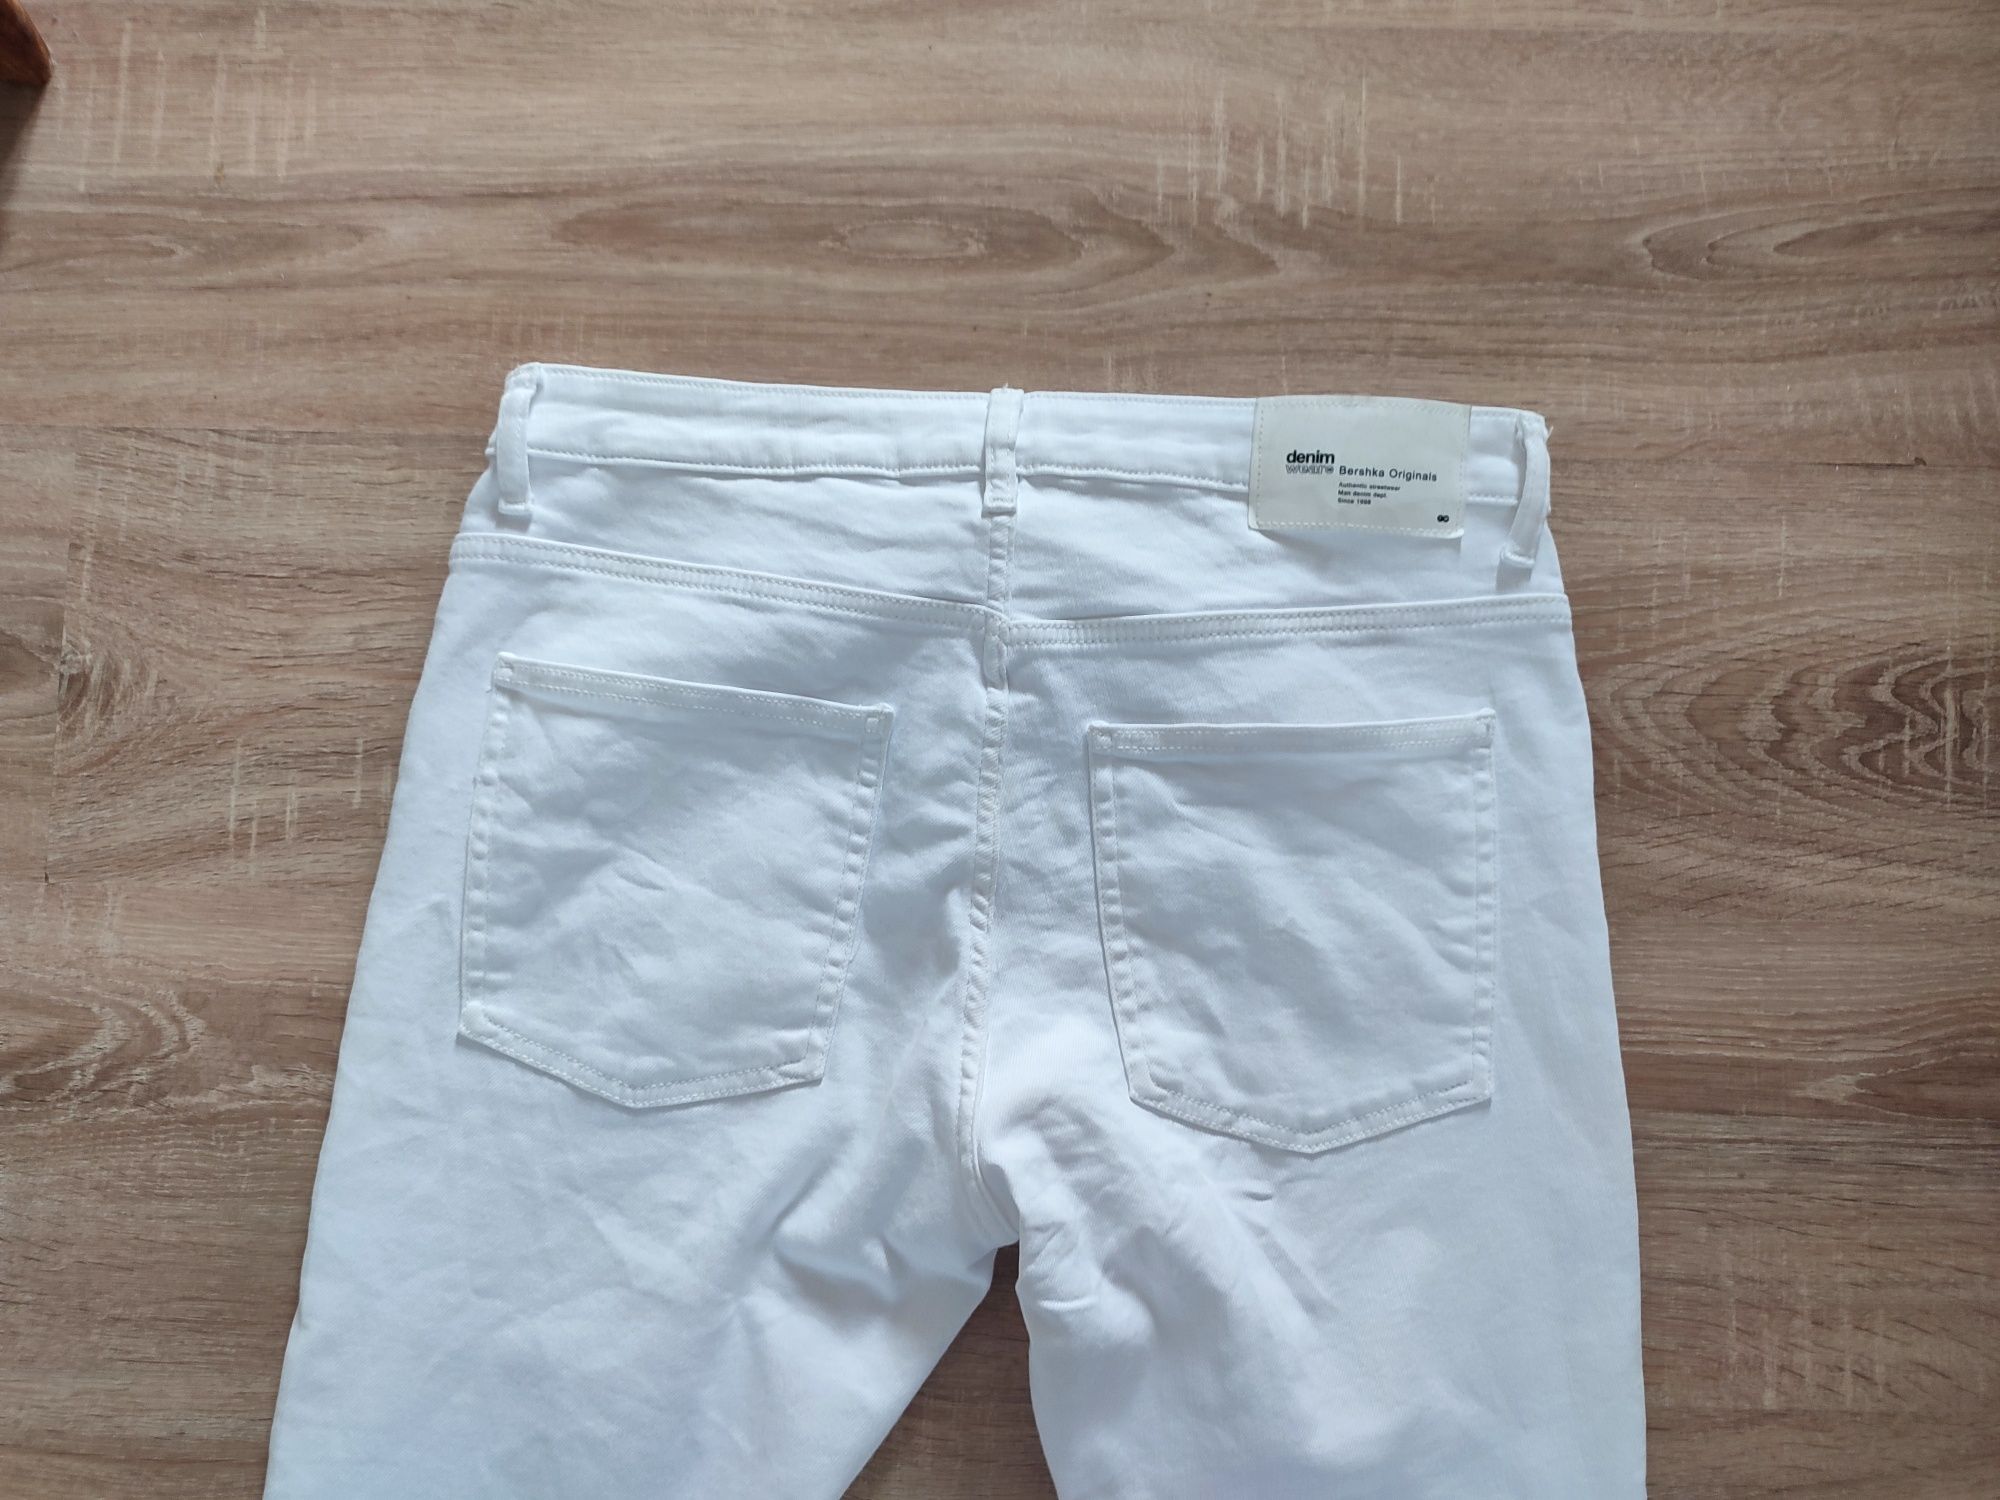 Spodnie białe Bershka